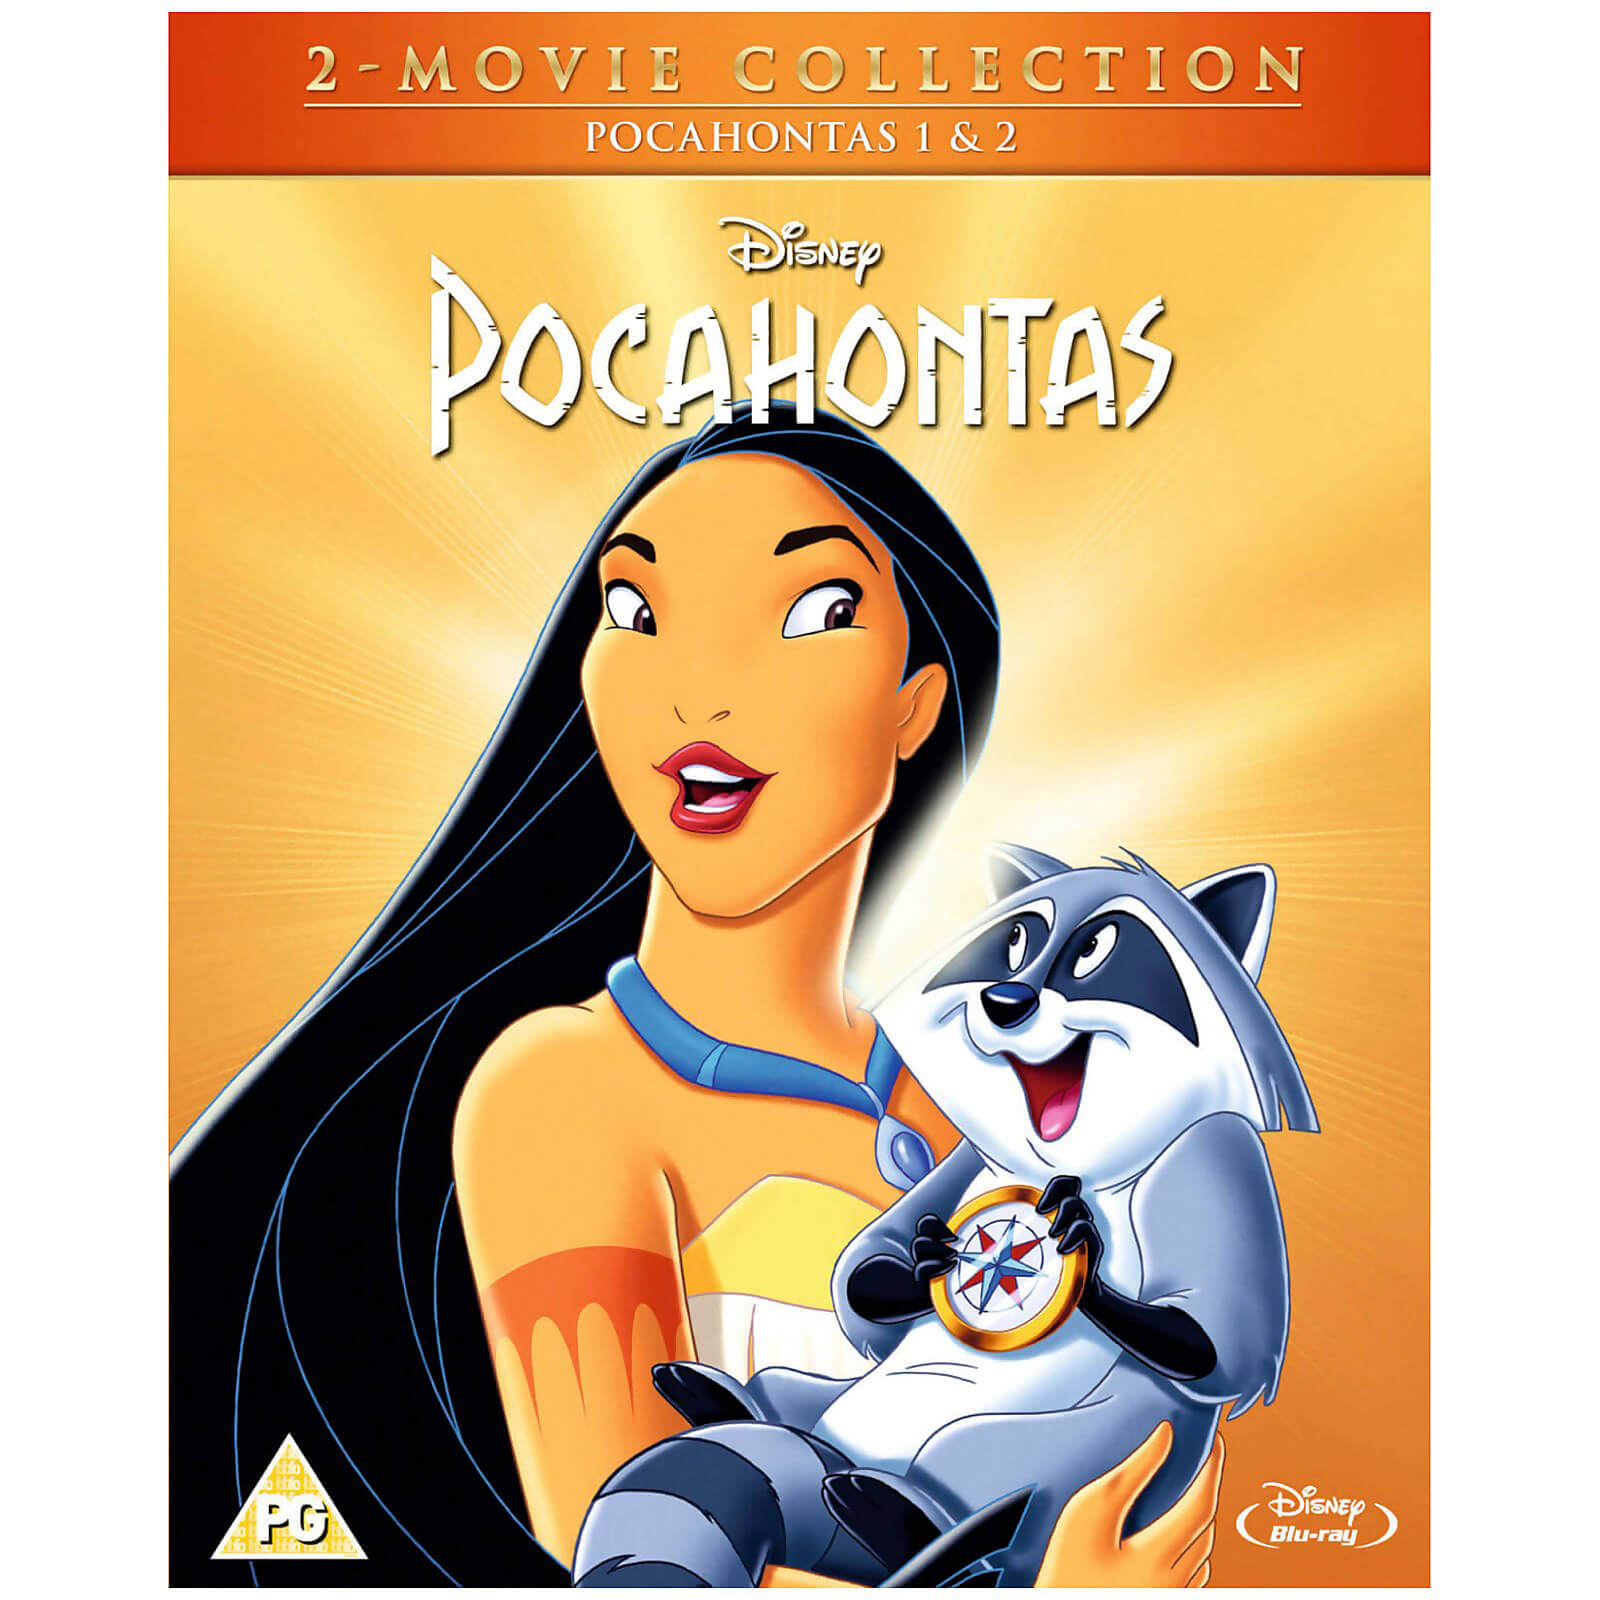 Pocahontas 1 & 2 Doppelpack von Disney